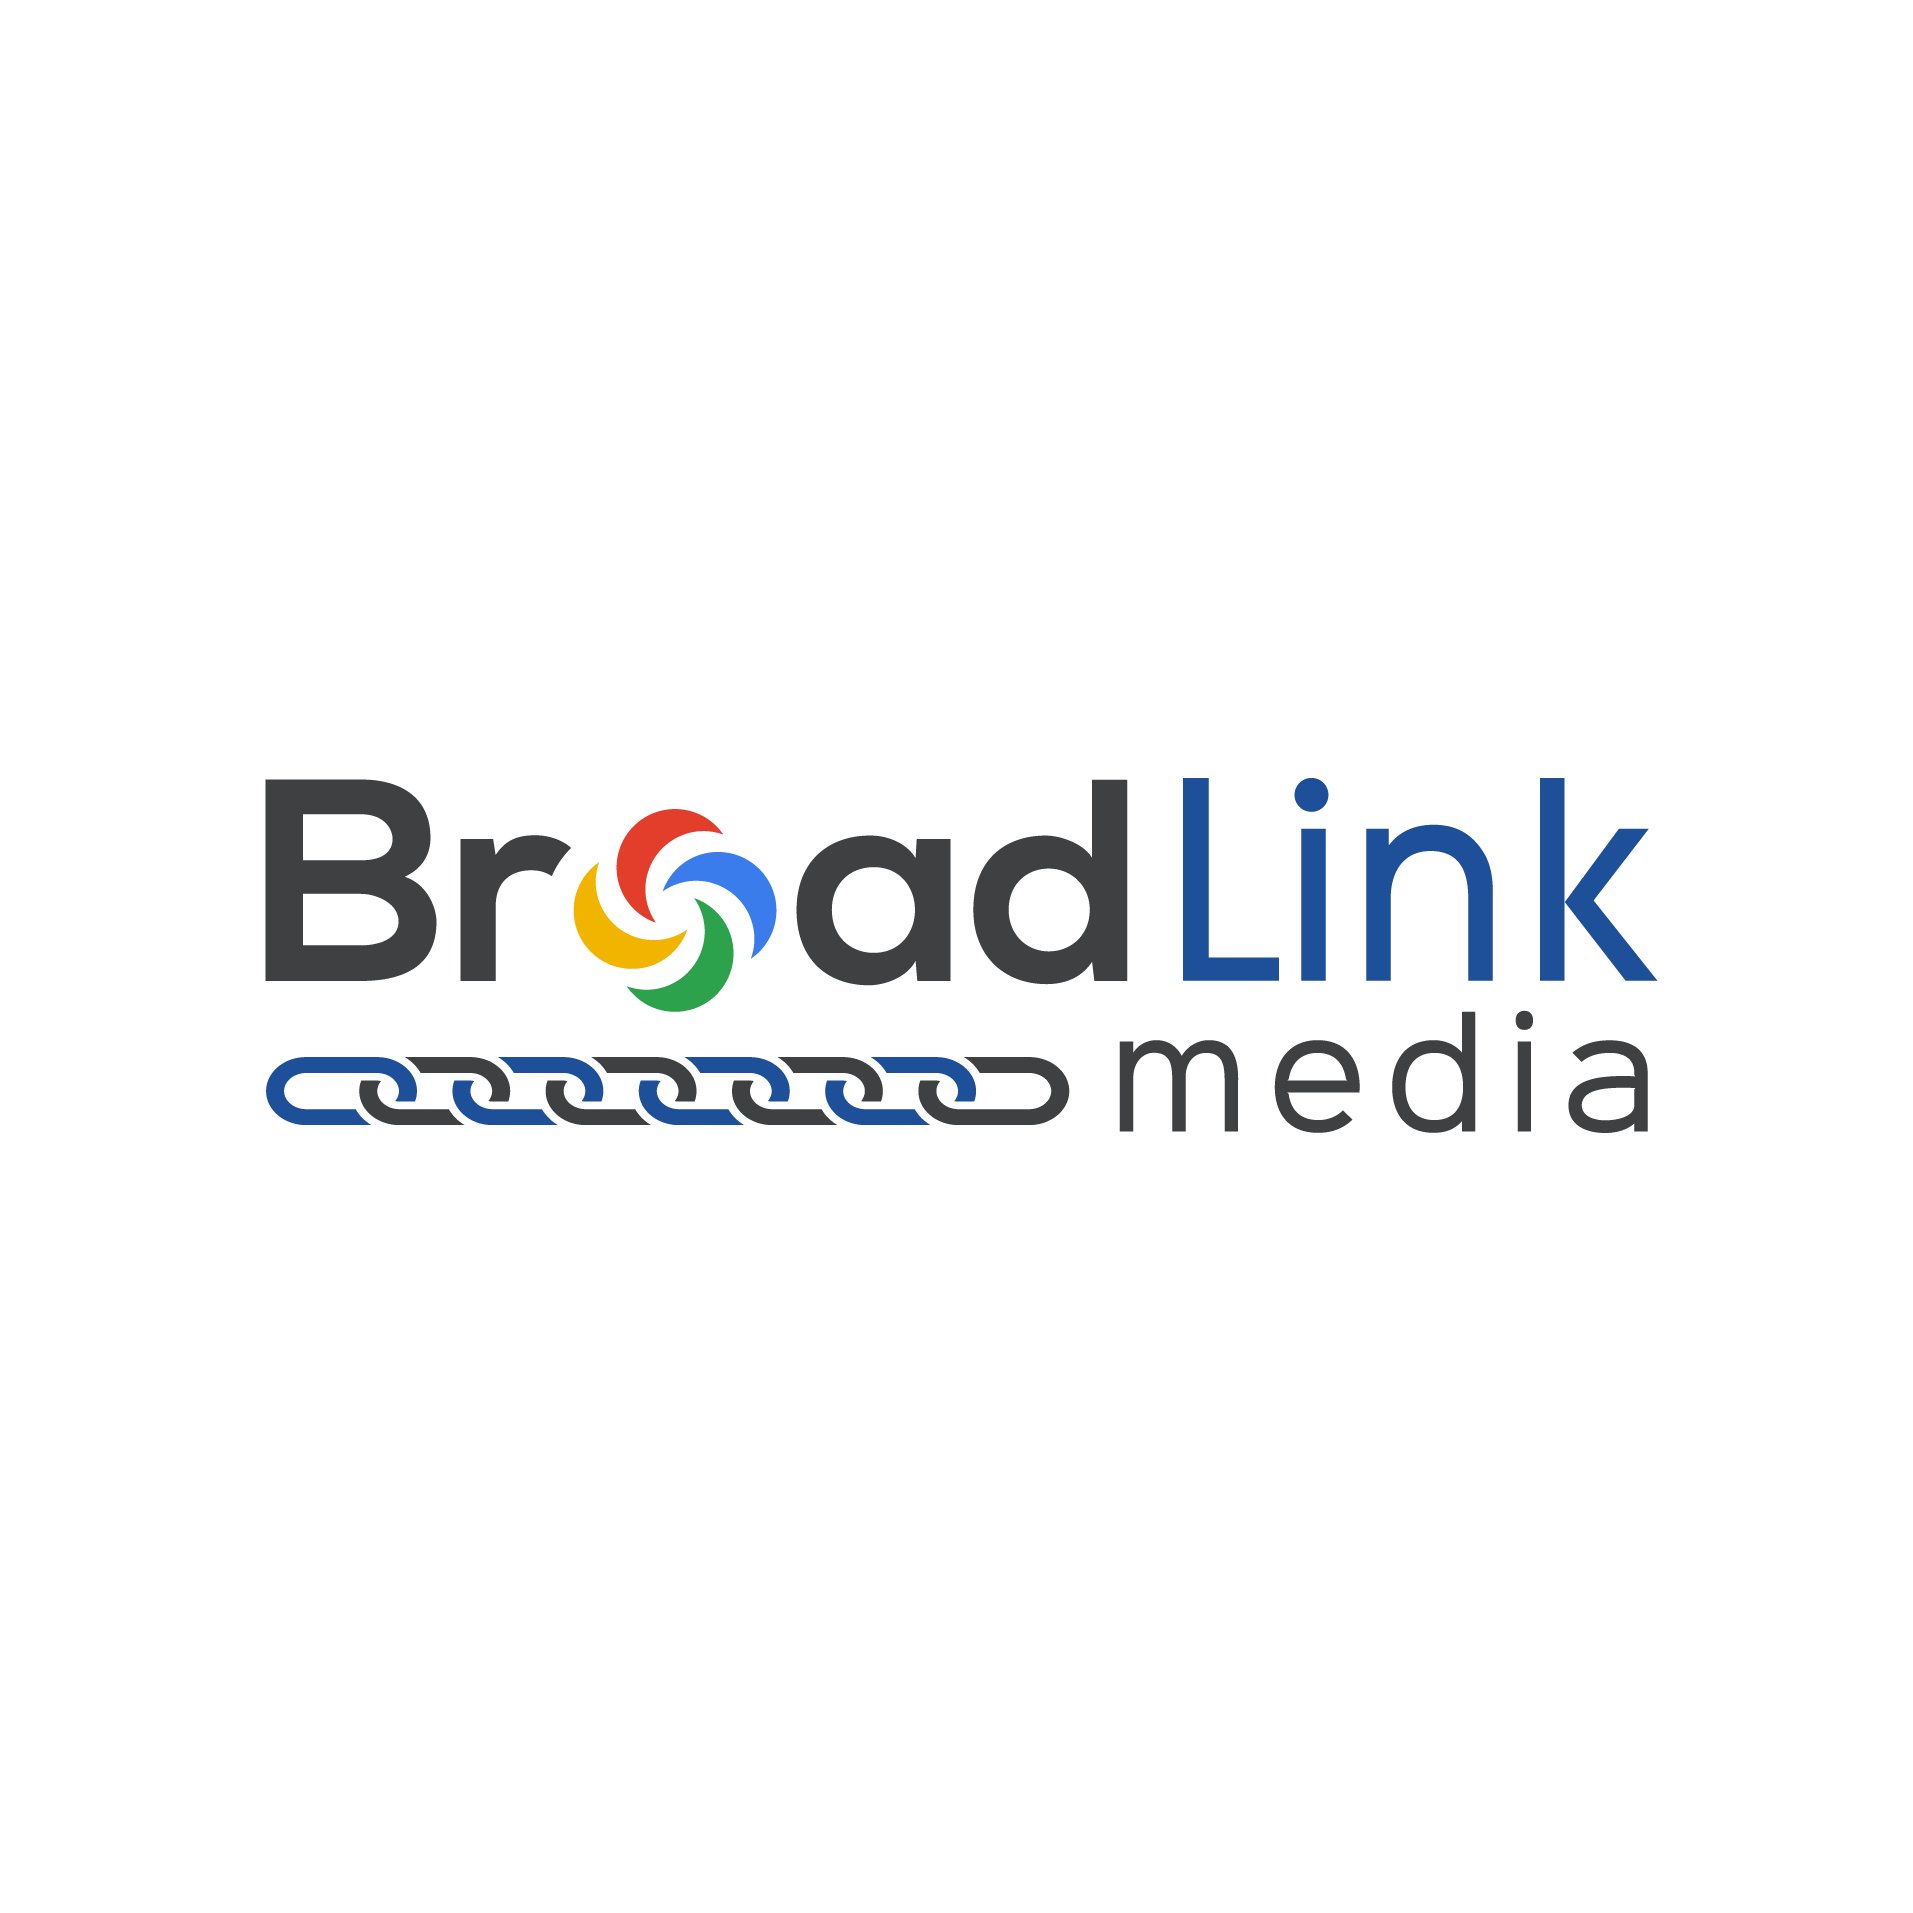 broadlinkmedia’s profile image